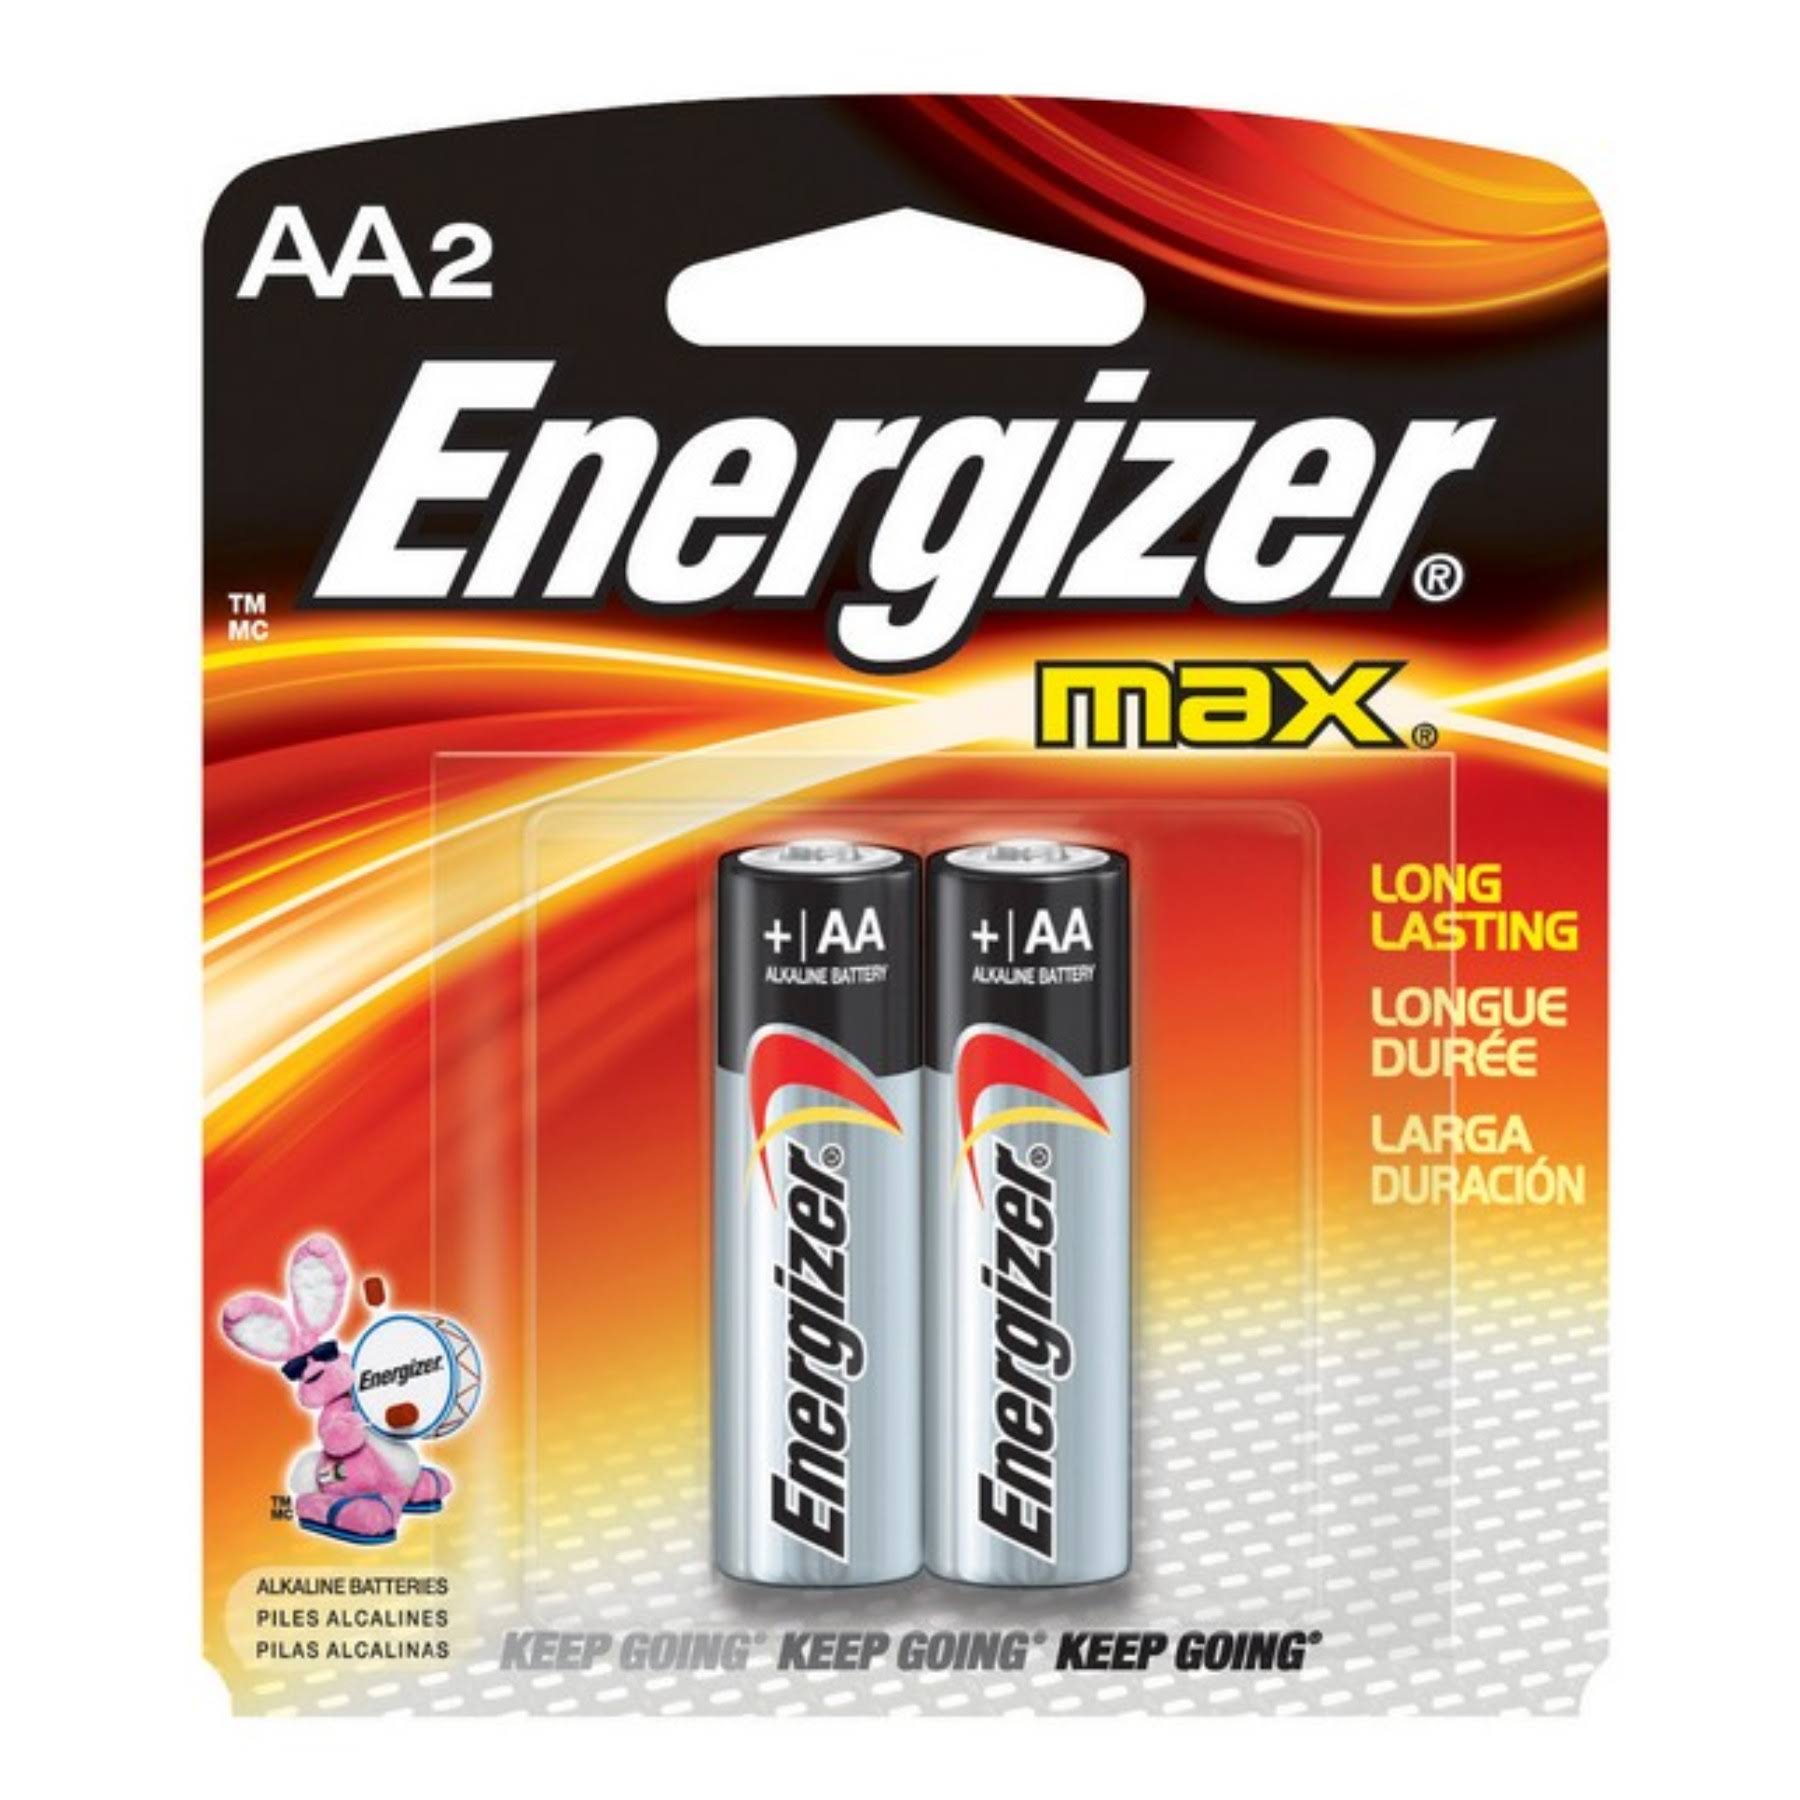 Energizer Max AA Alkaline Batteries - 2 Pack